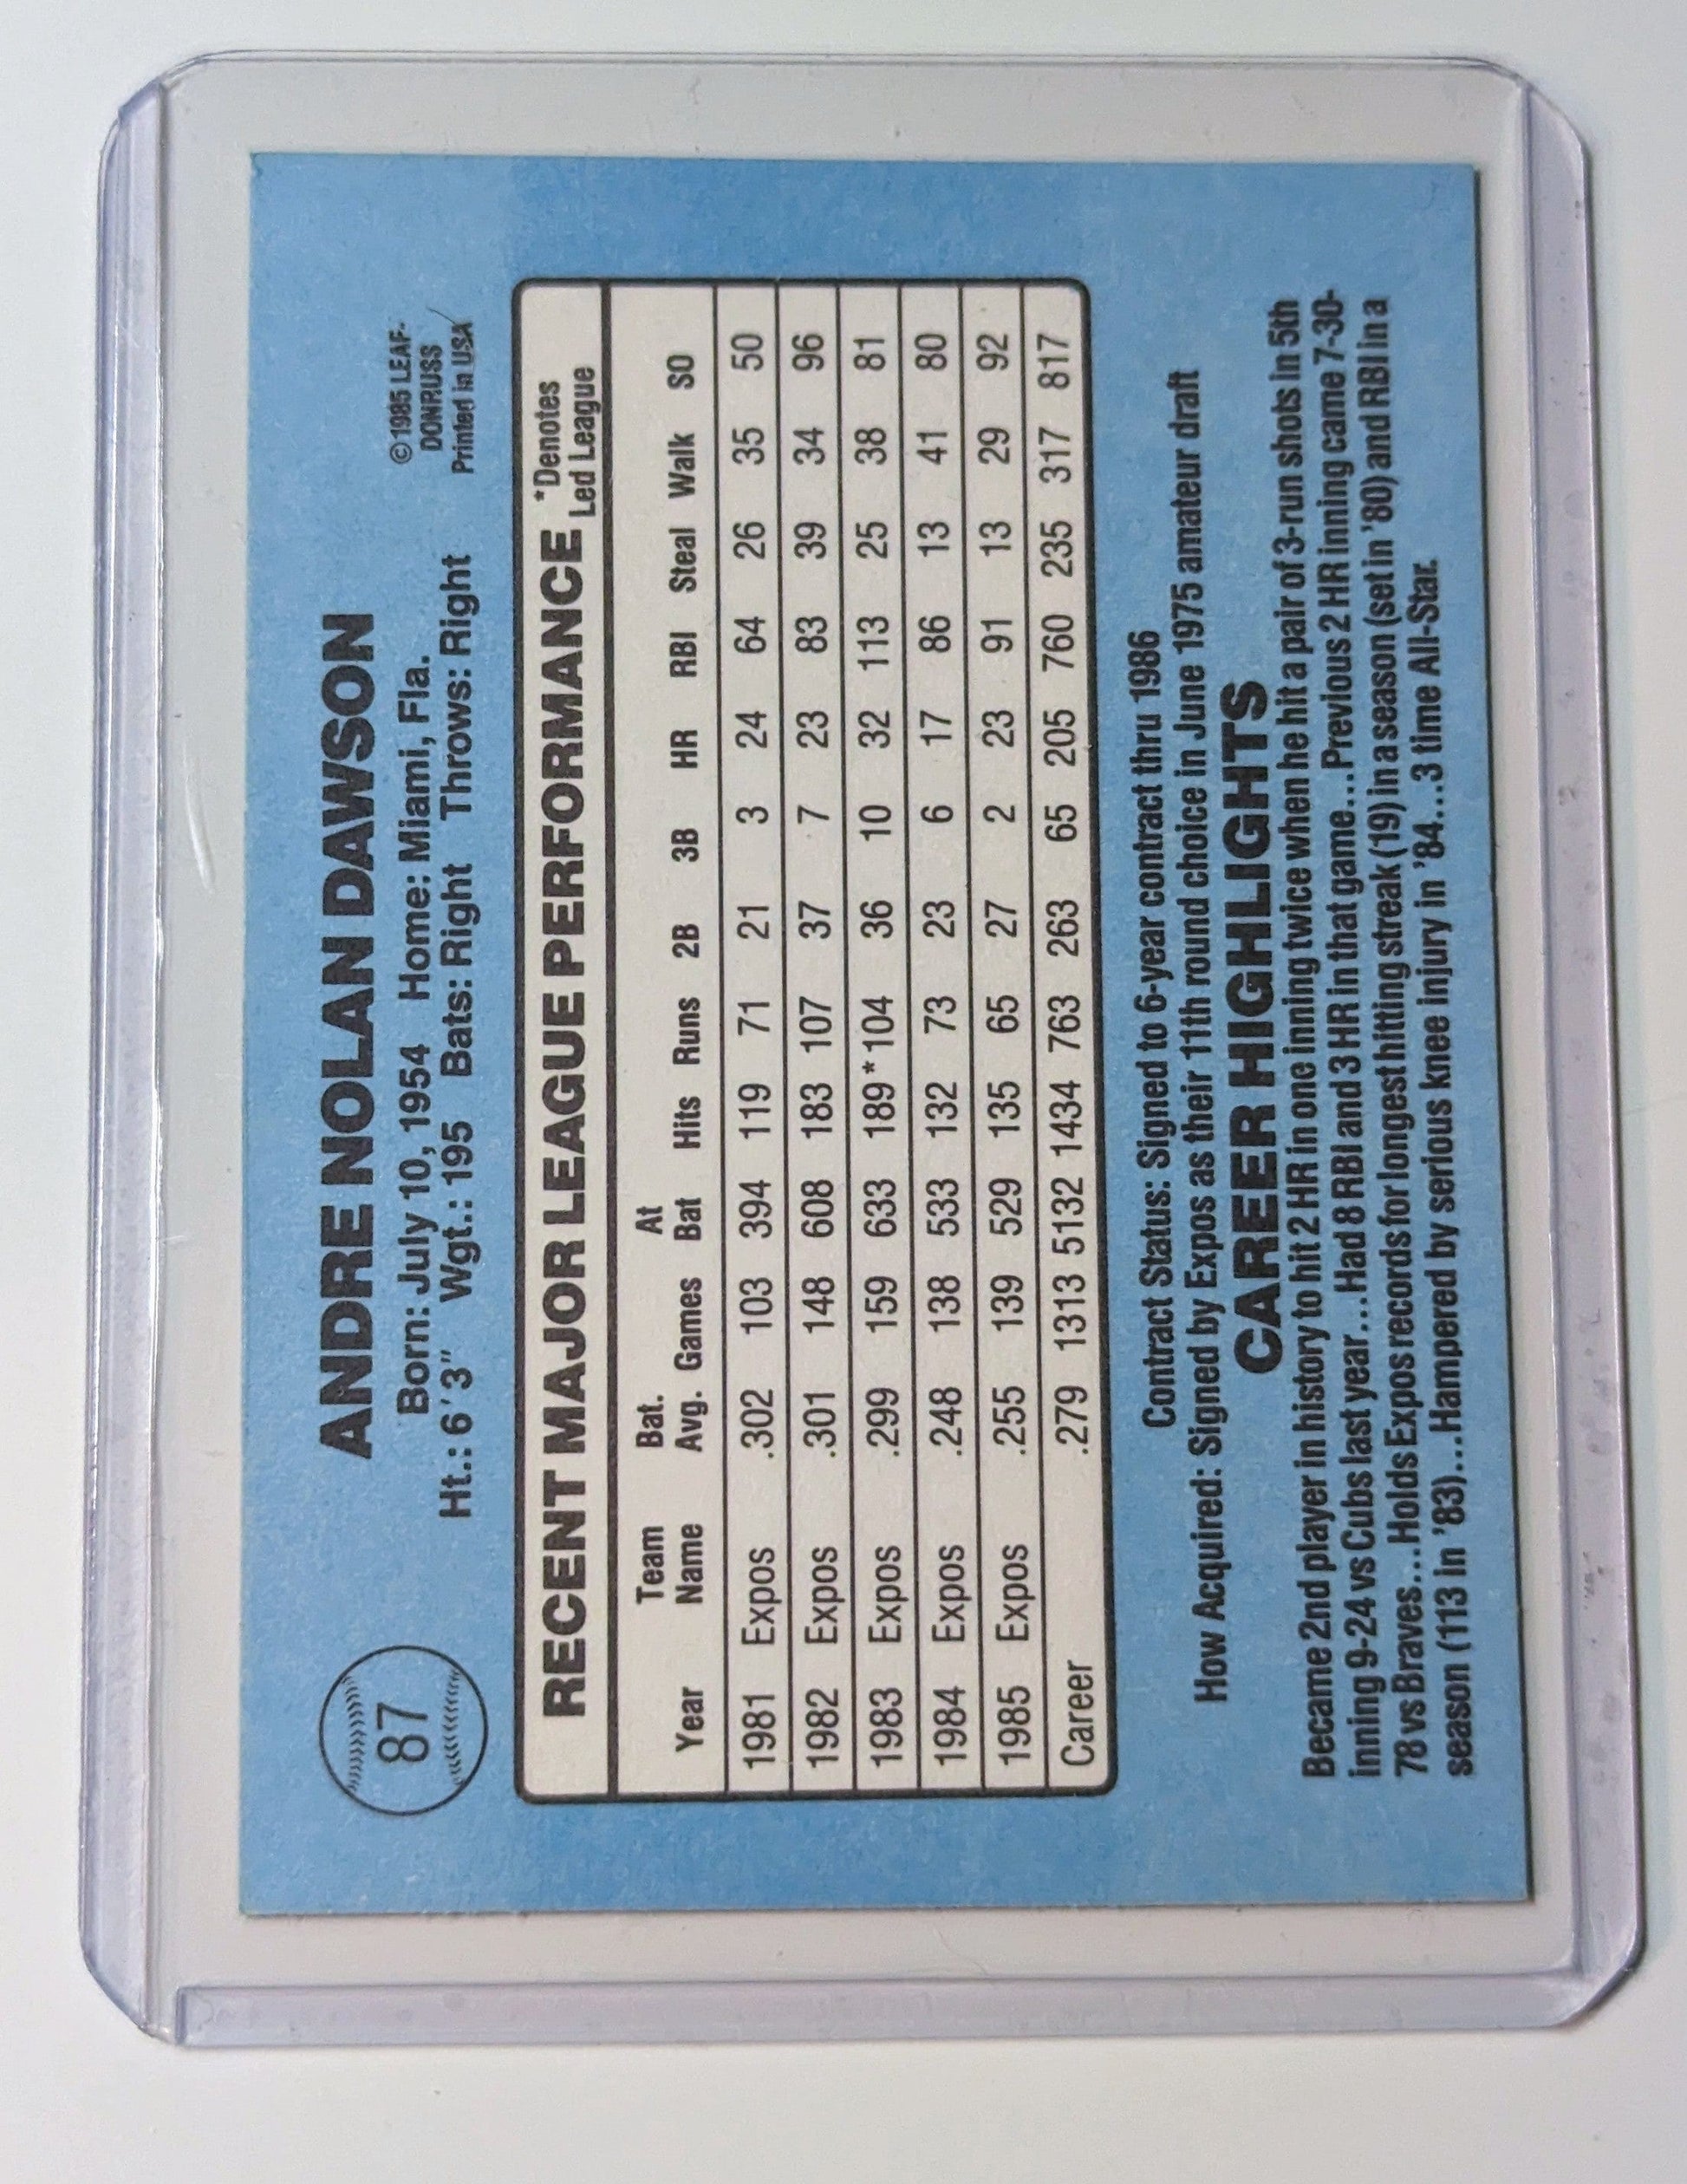 FIINR Baseball Card 1986 Donruss Andre Dawson Vintage Baseball Card #87 - Mint Condition